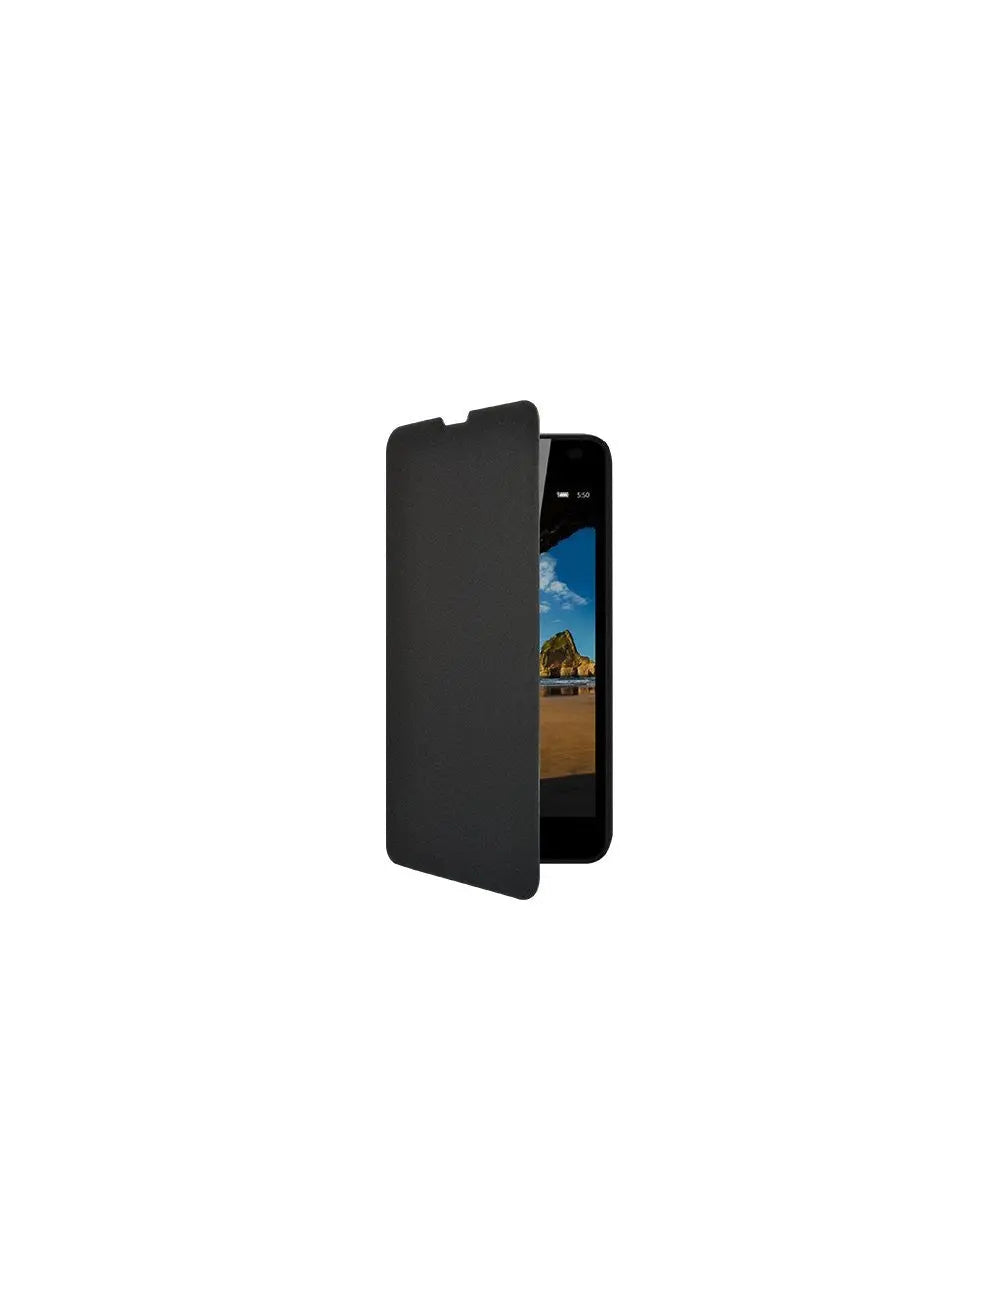 Etui folio noir pour noir Lumia 550 big ben